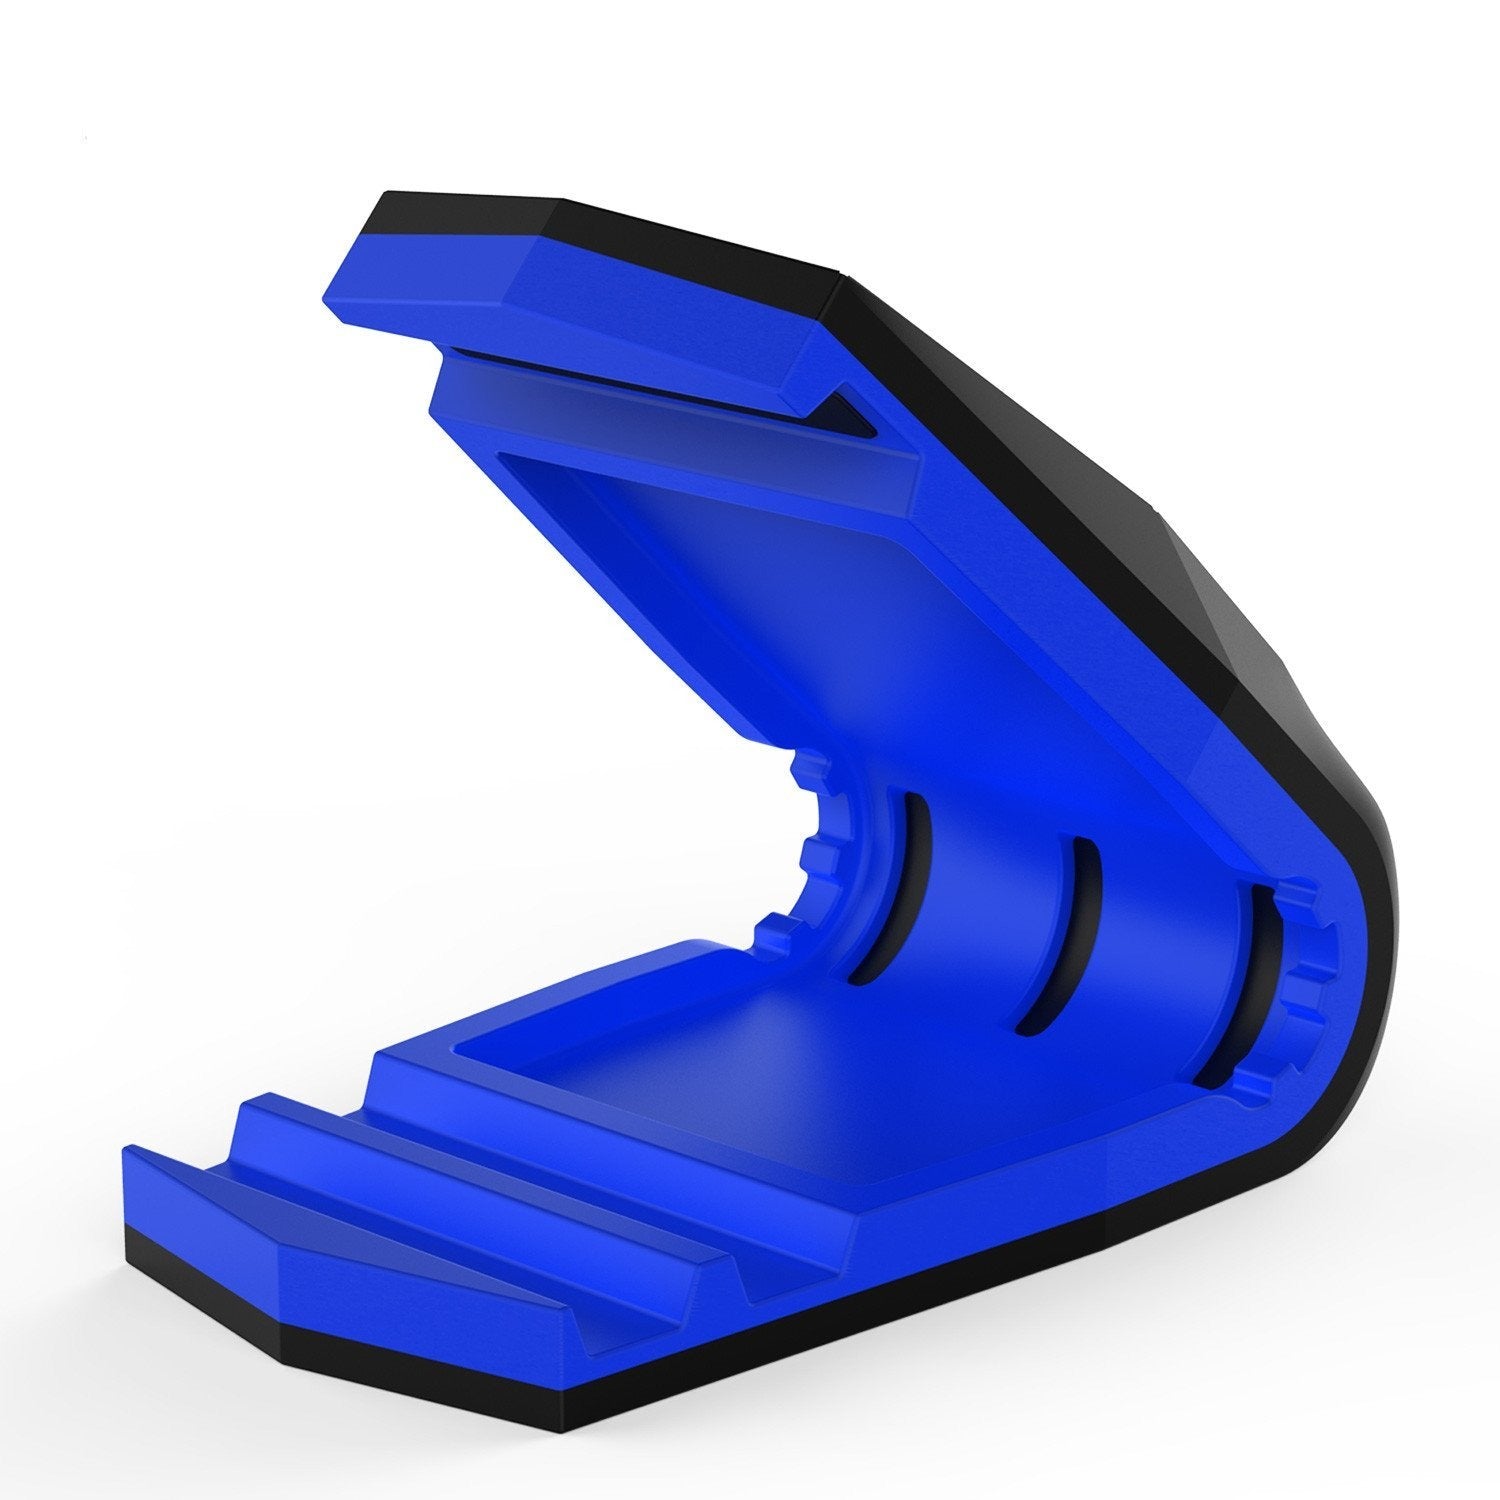 Viper Car Phone Holder Blue, Universal Dashboard Mount for all Smartphones - PunkCase NZ